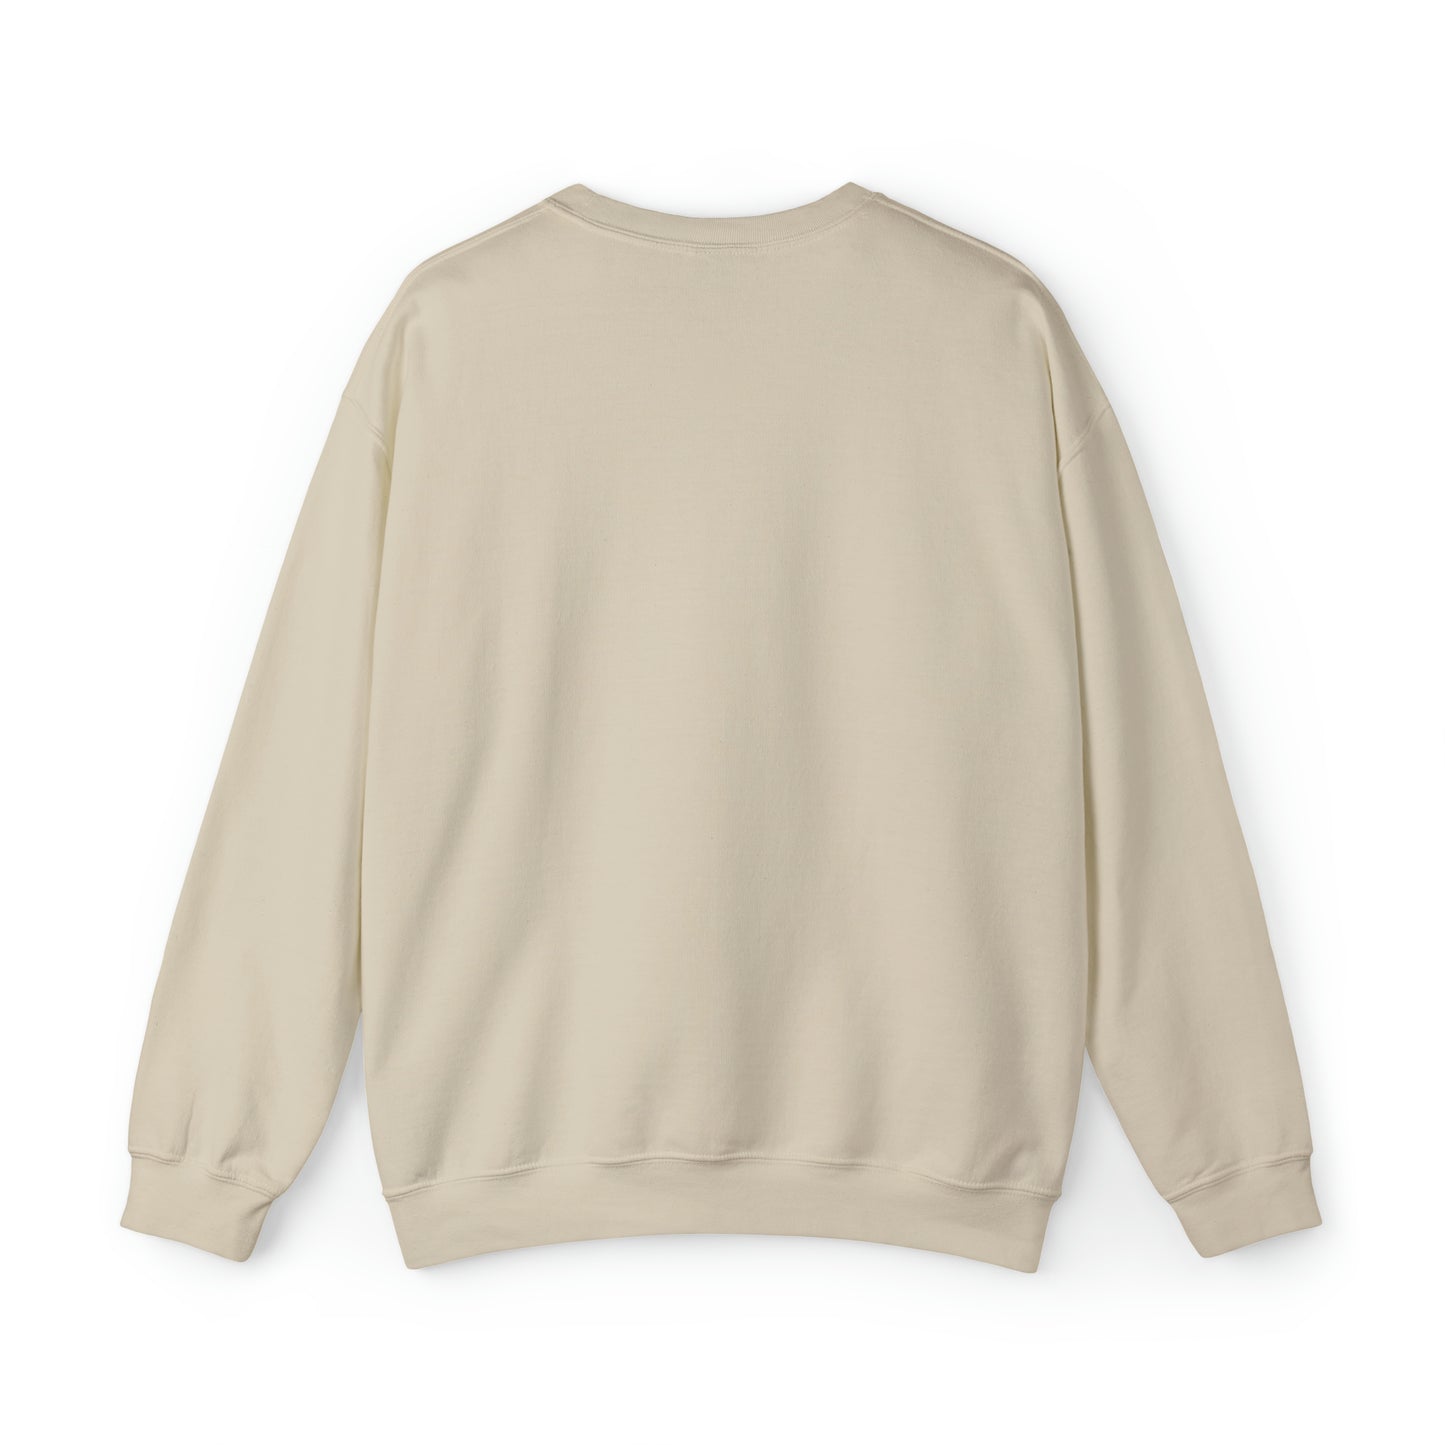 “MY FAFO GOES BY TITO” Unisex Heavy Blend™ Crewneck Sweatshirt